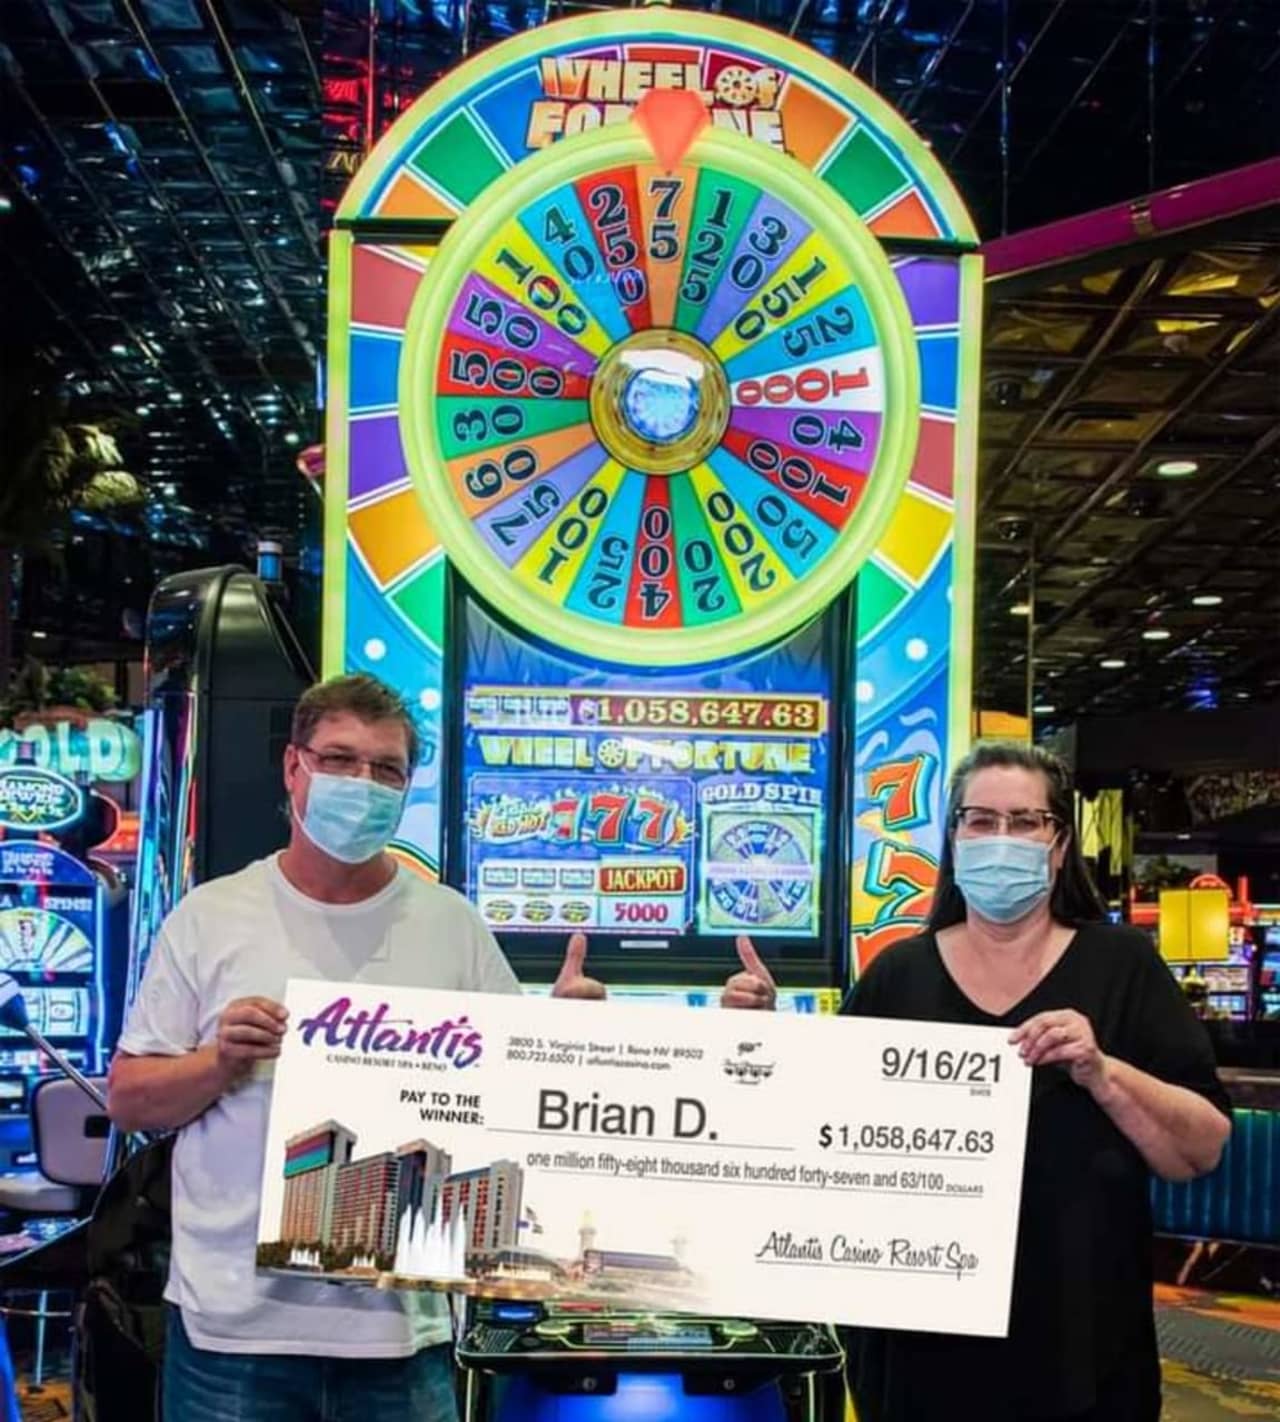 Brian D. won $1 million on a Wheel of Fortune slot machine at Atlantis Casino Resort Spa.